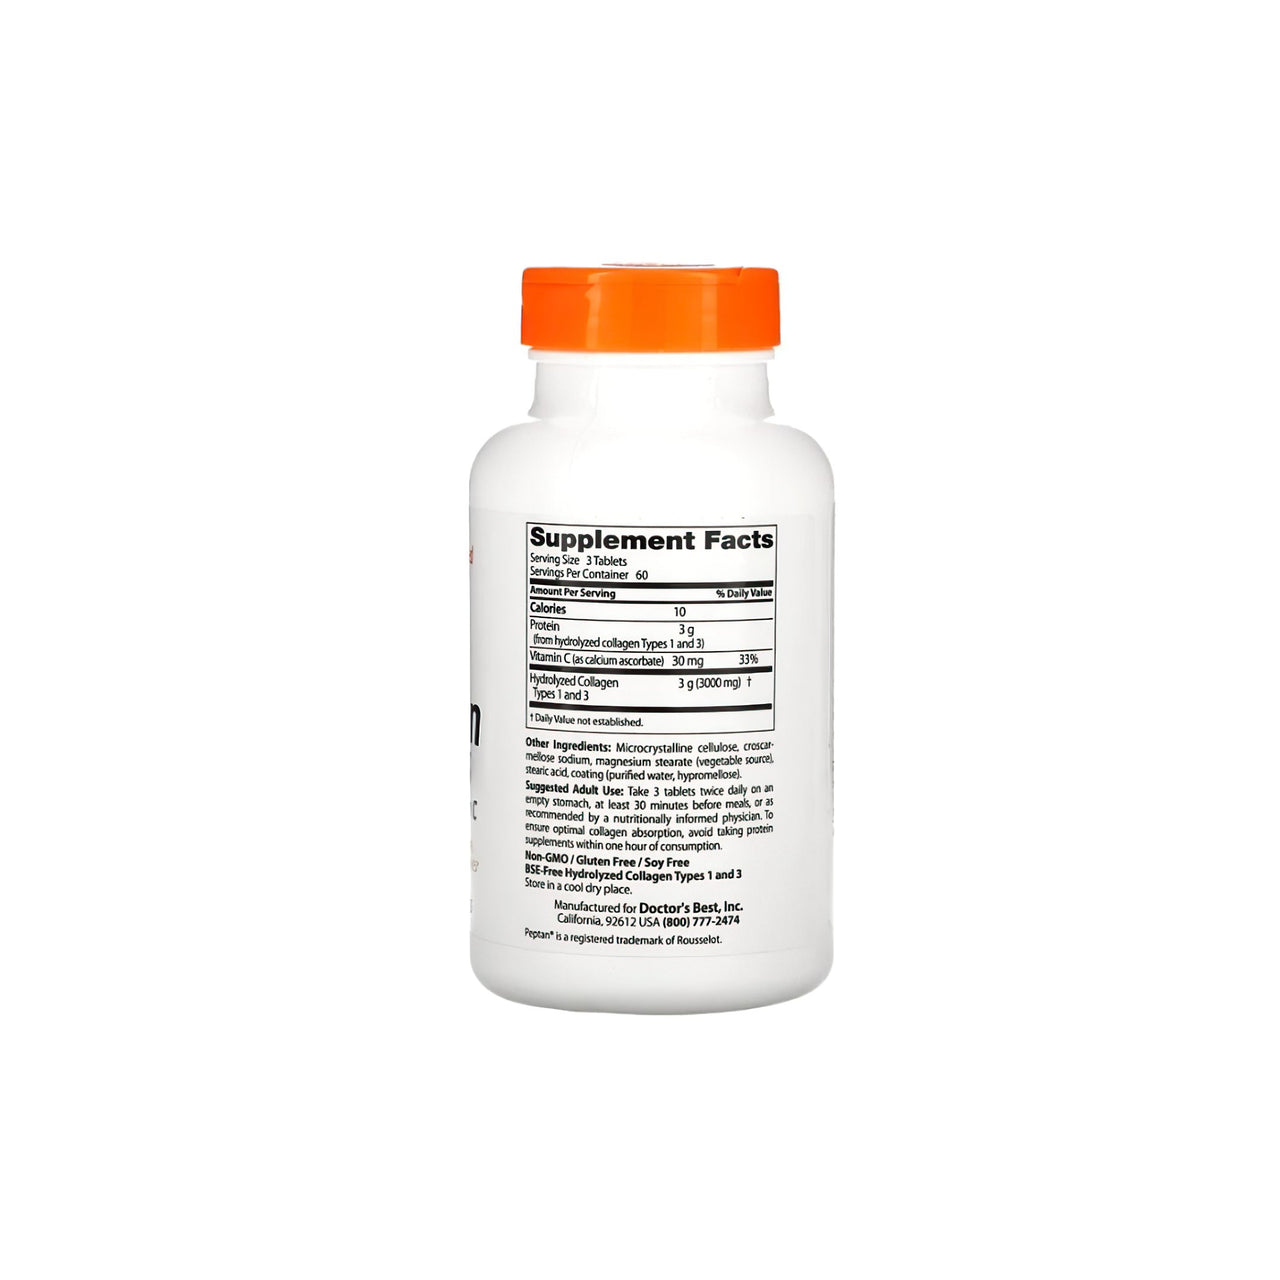 Um frasco de Doctor's Best Collagen types 1 and 3 1000 mg 180 tablets sobre um fundo branco.